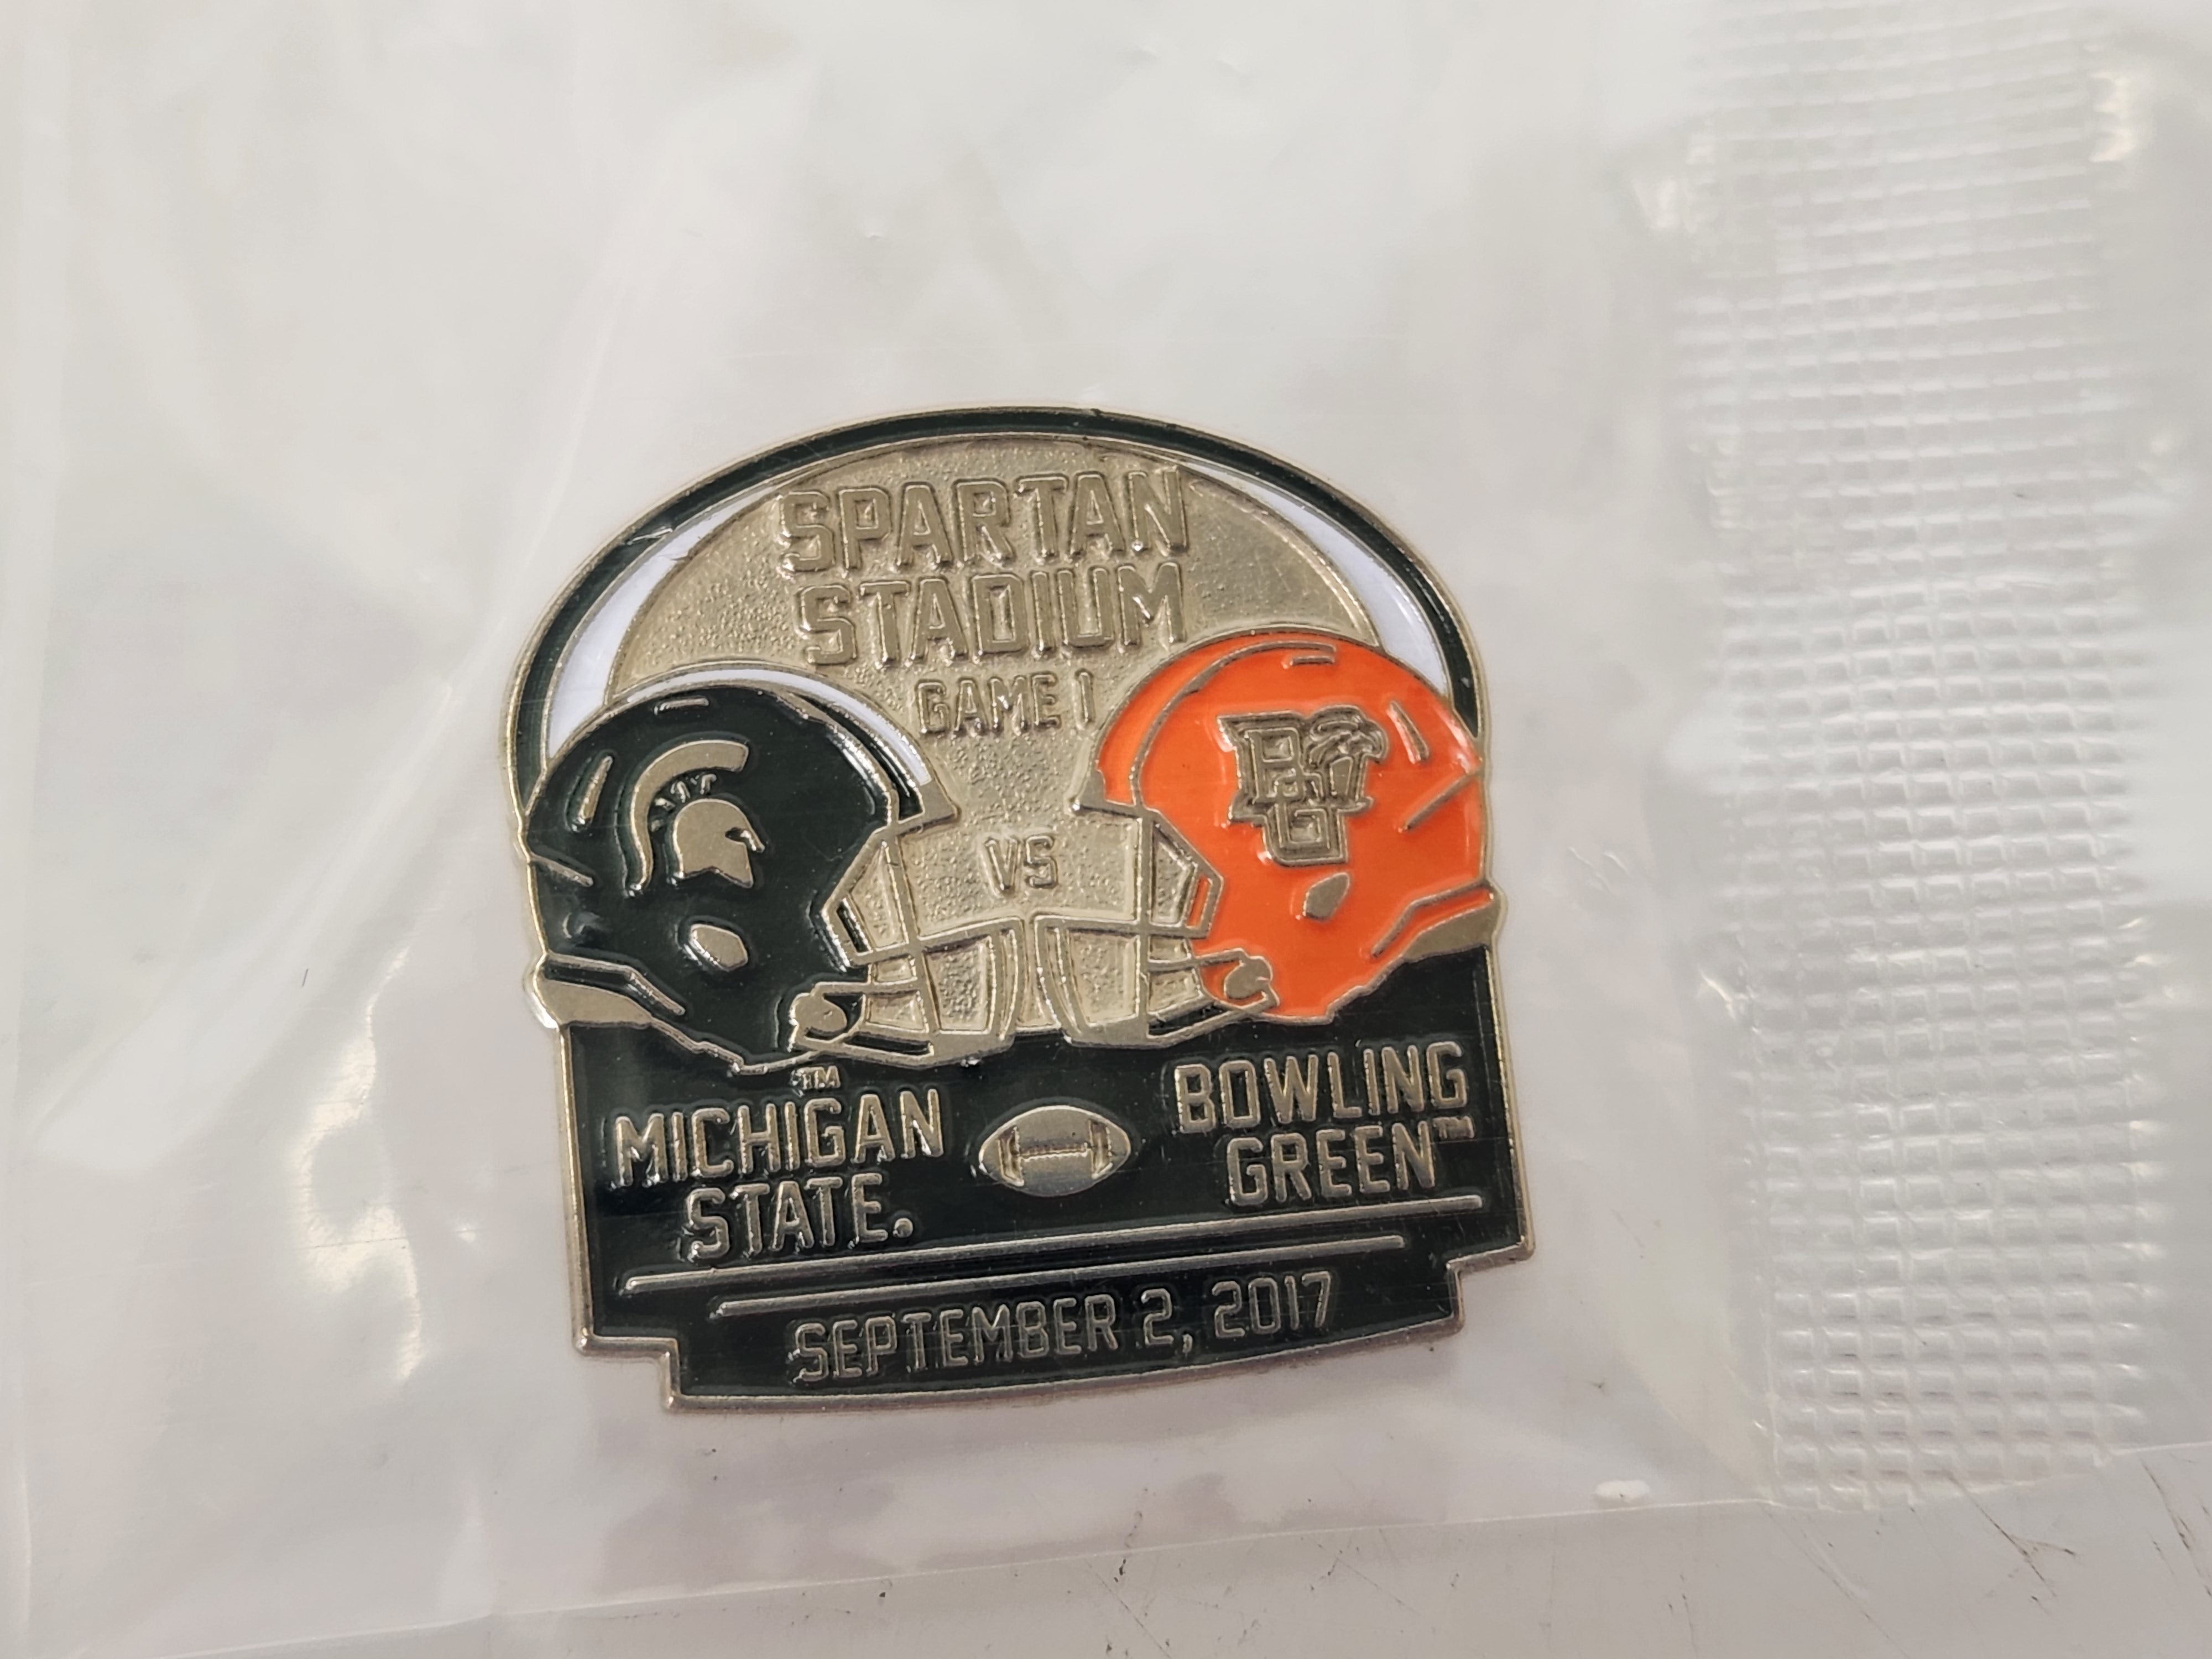 2017 Michigan State vs. Bowling Green Gameday Pin